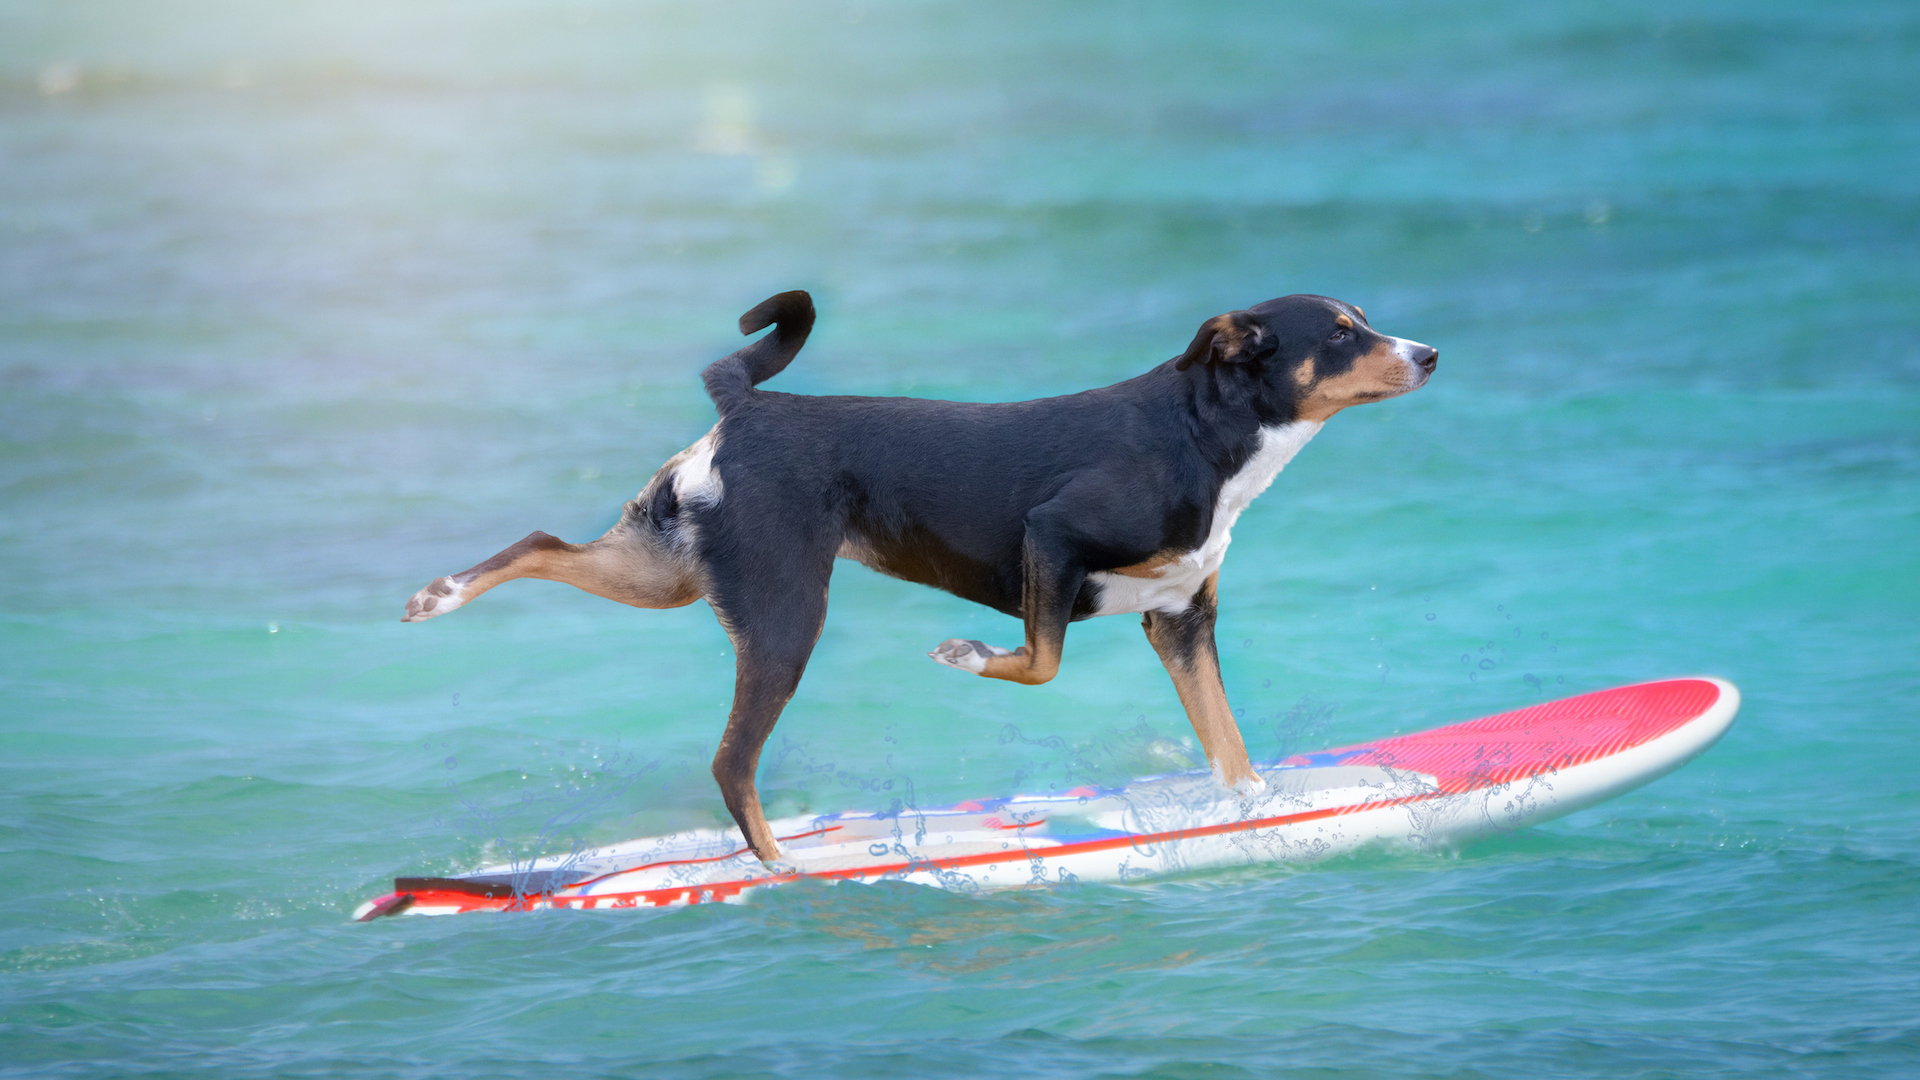 A dog on a surfboard